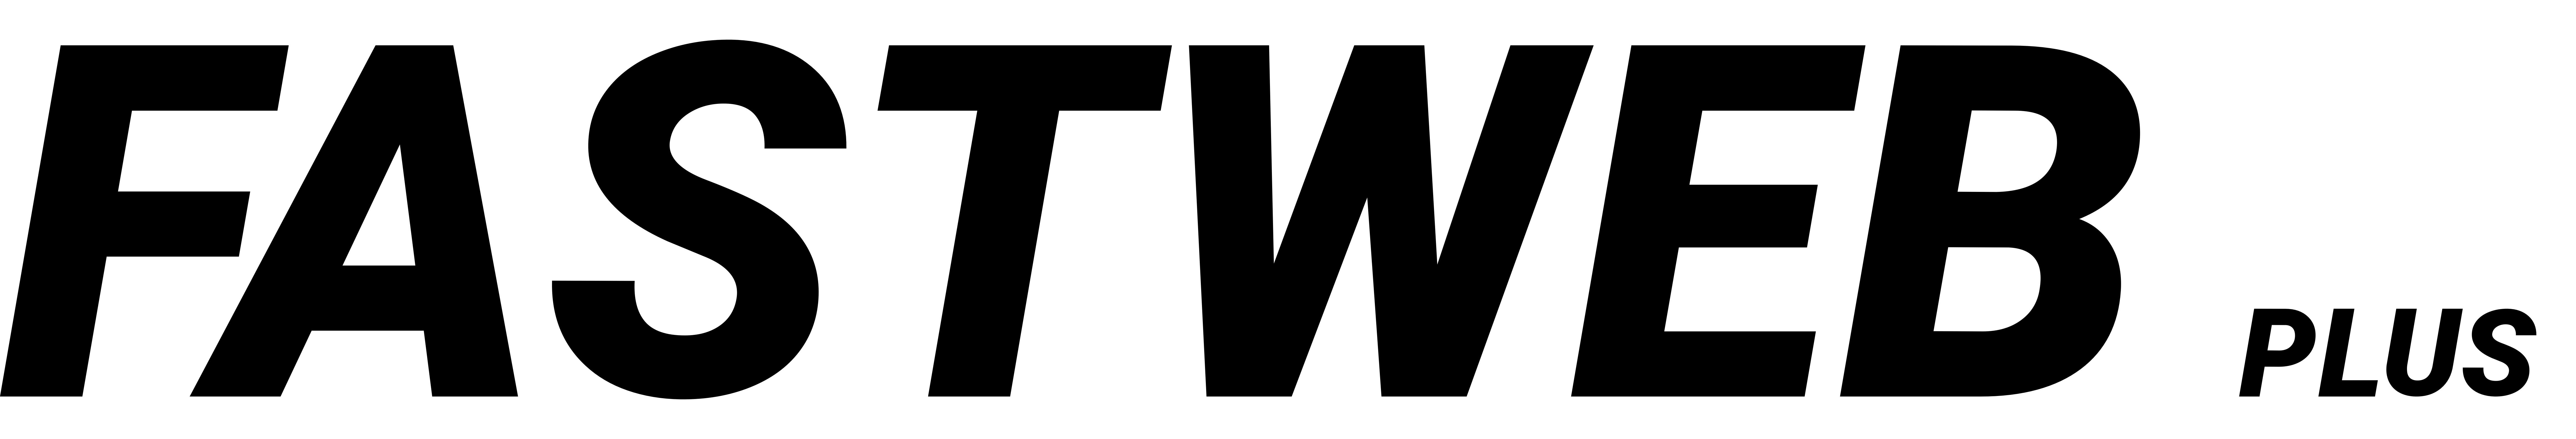 x2 logo